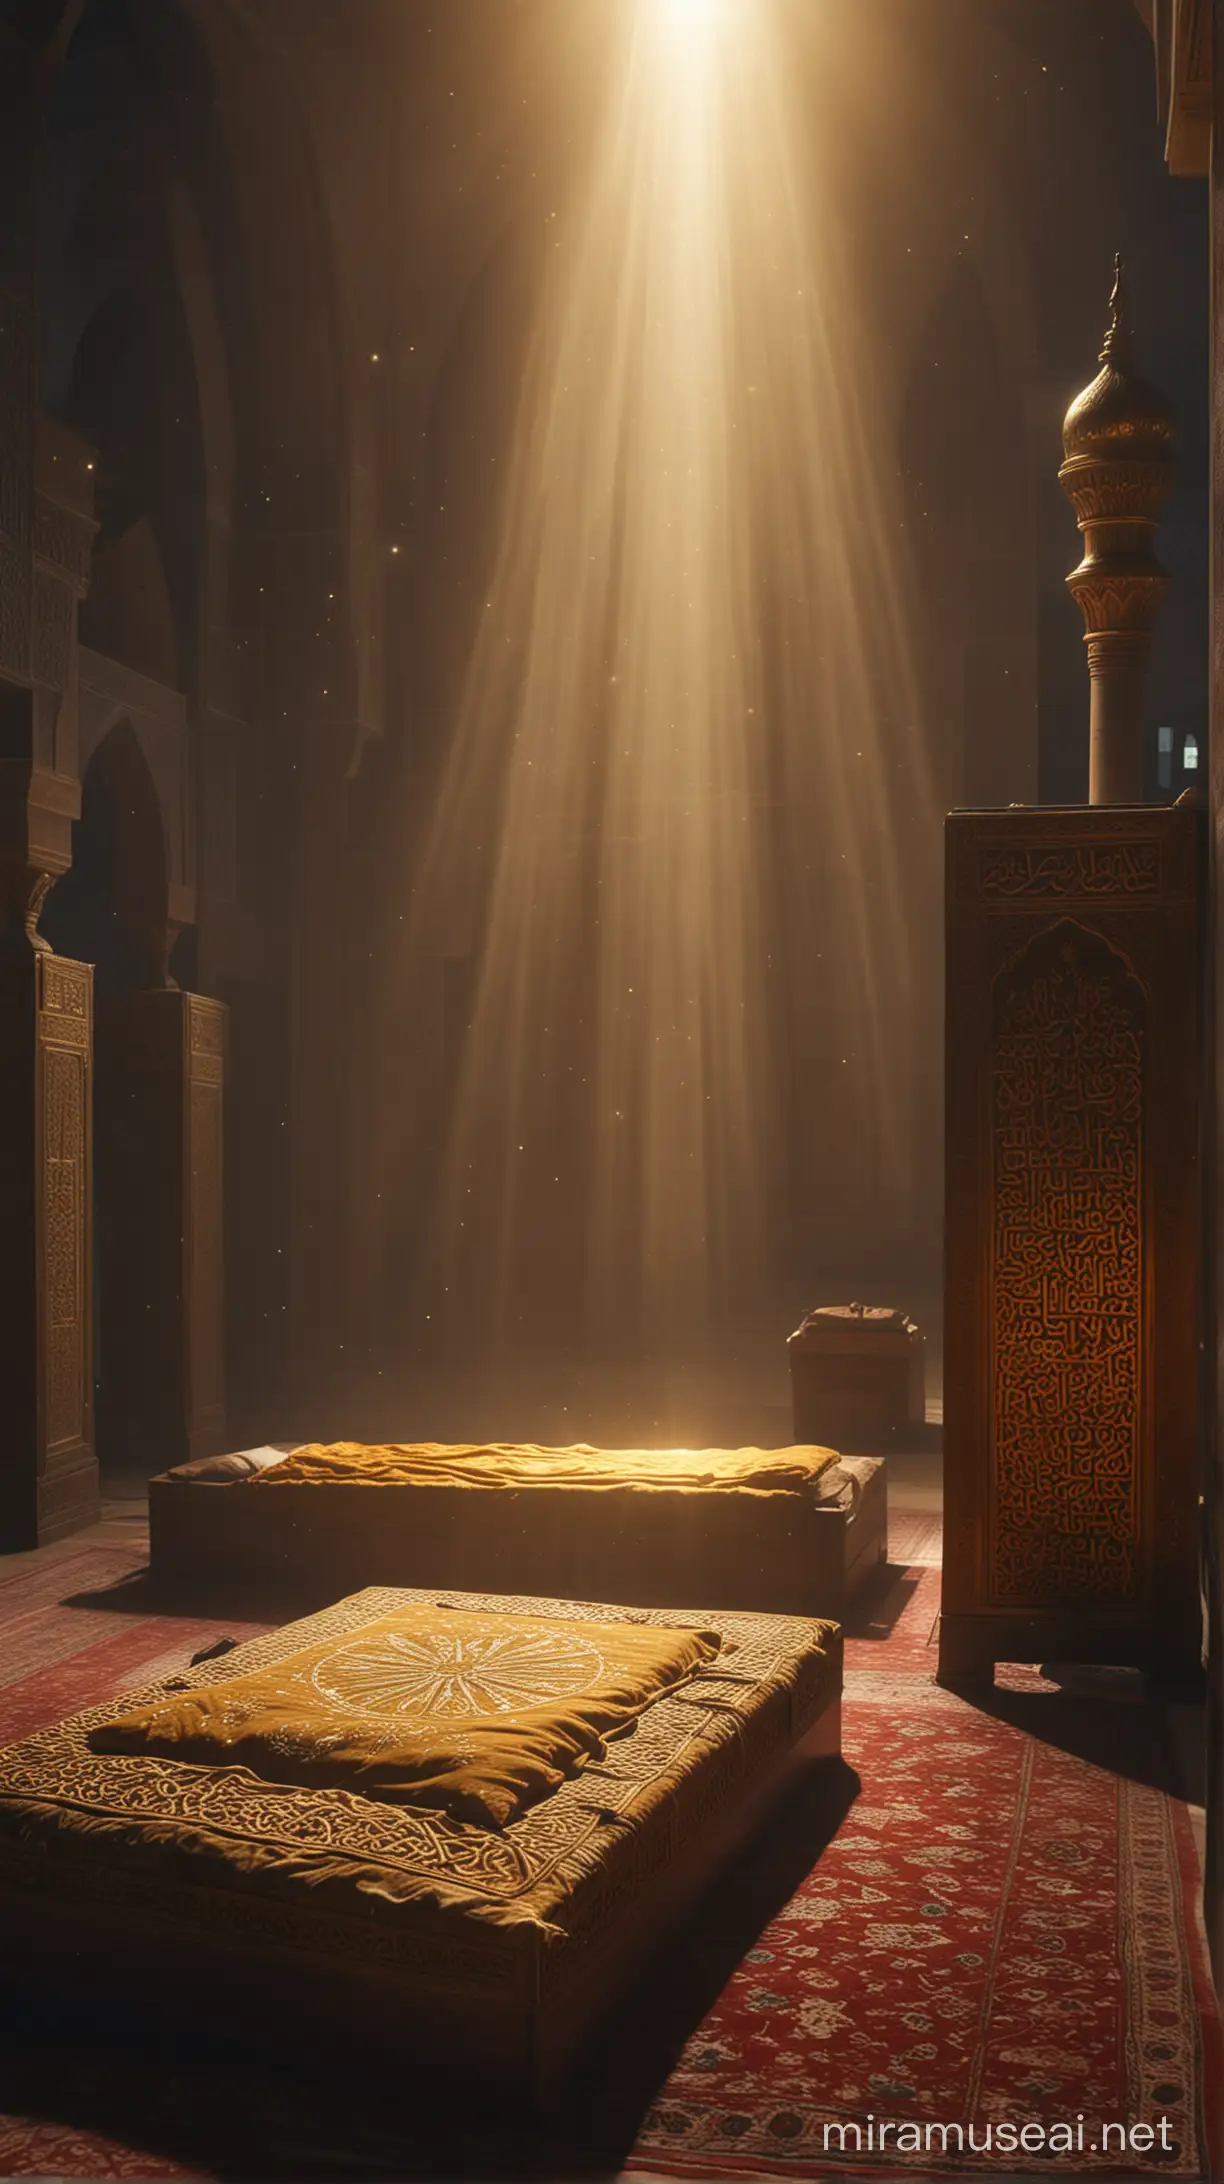 Muhammads Spiritual Presence Illuminated Shrine in Islamic Tradition